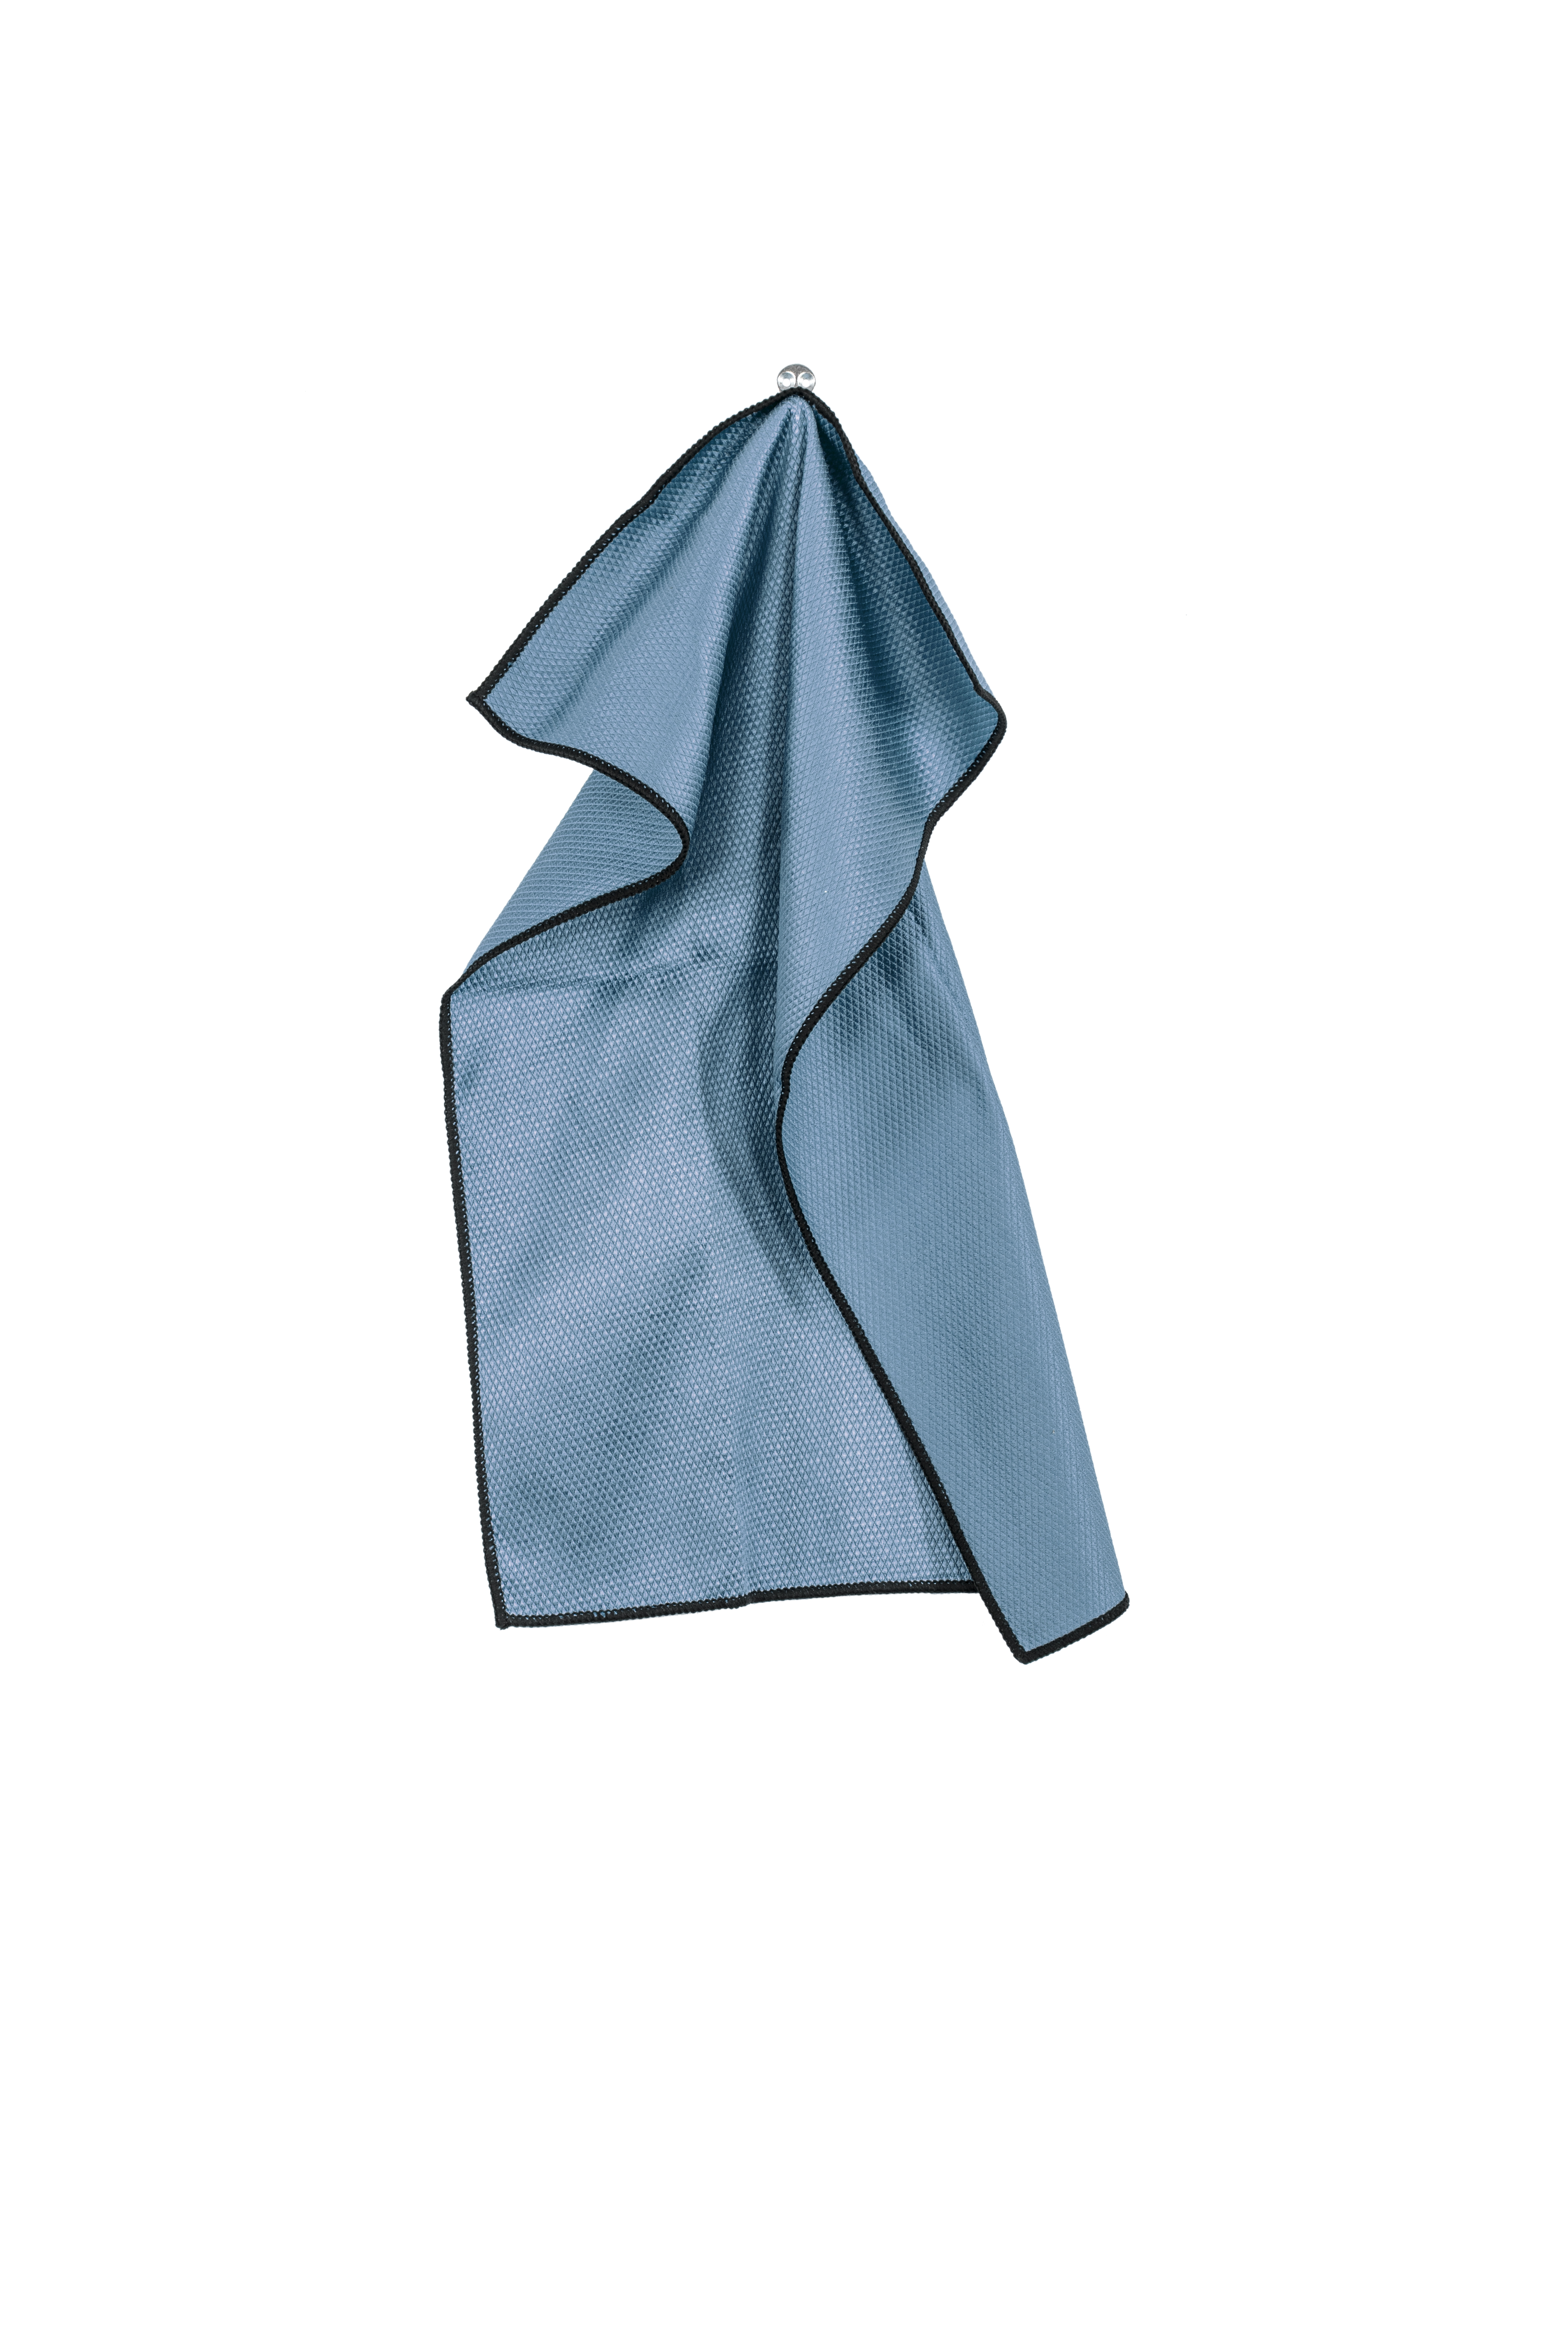 Glass-cloth ESSENTIALS - microfiber 40x60cm (per piece), stone blue